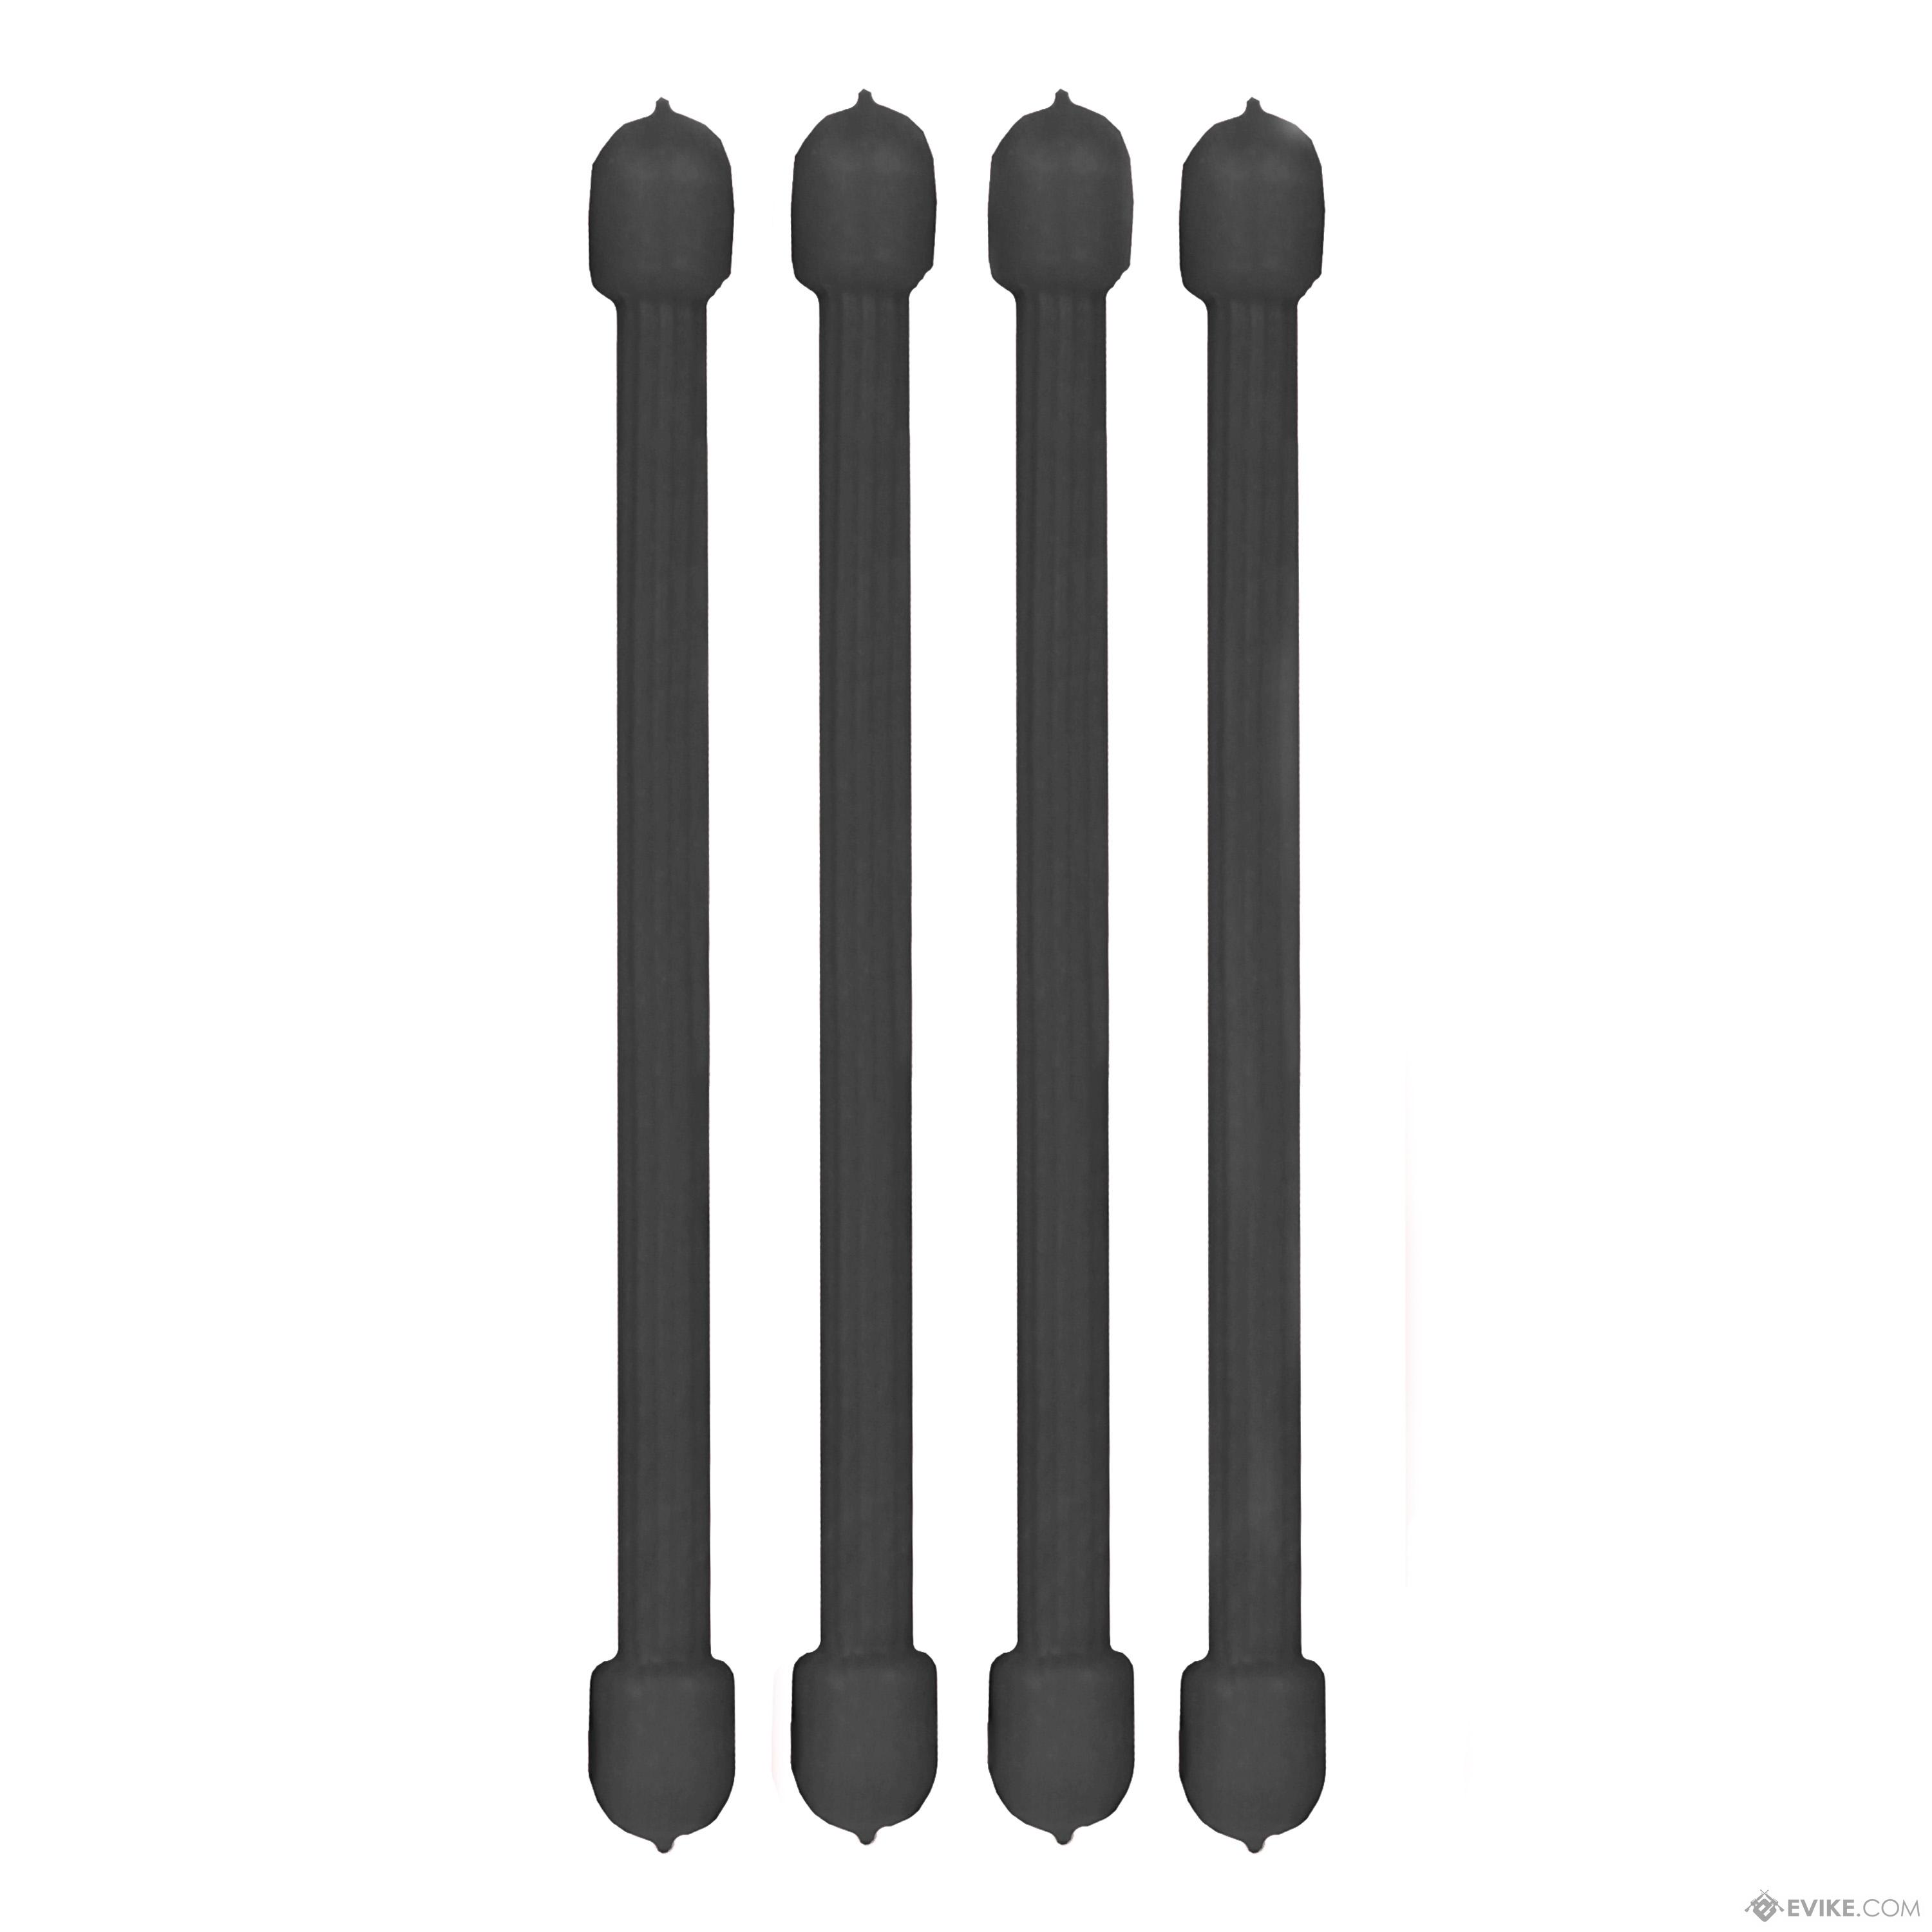 Nite Ize Gear Tie Reusable Rubber Twist Tie (Size: 3 4 Pack / Black)